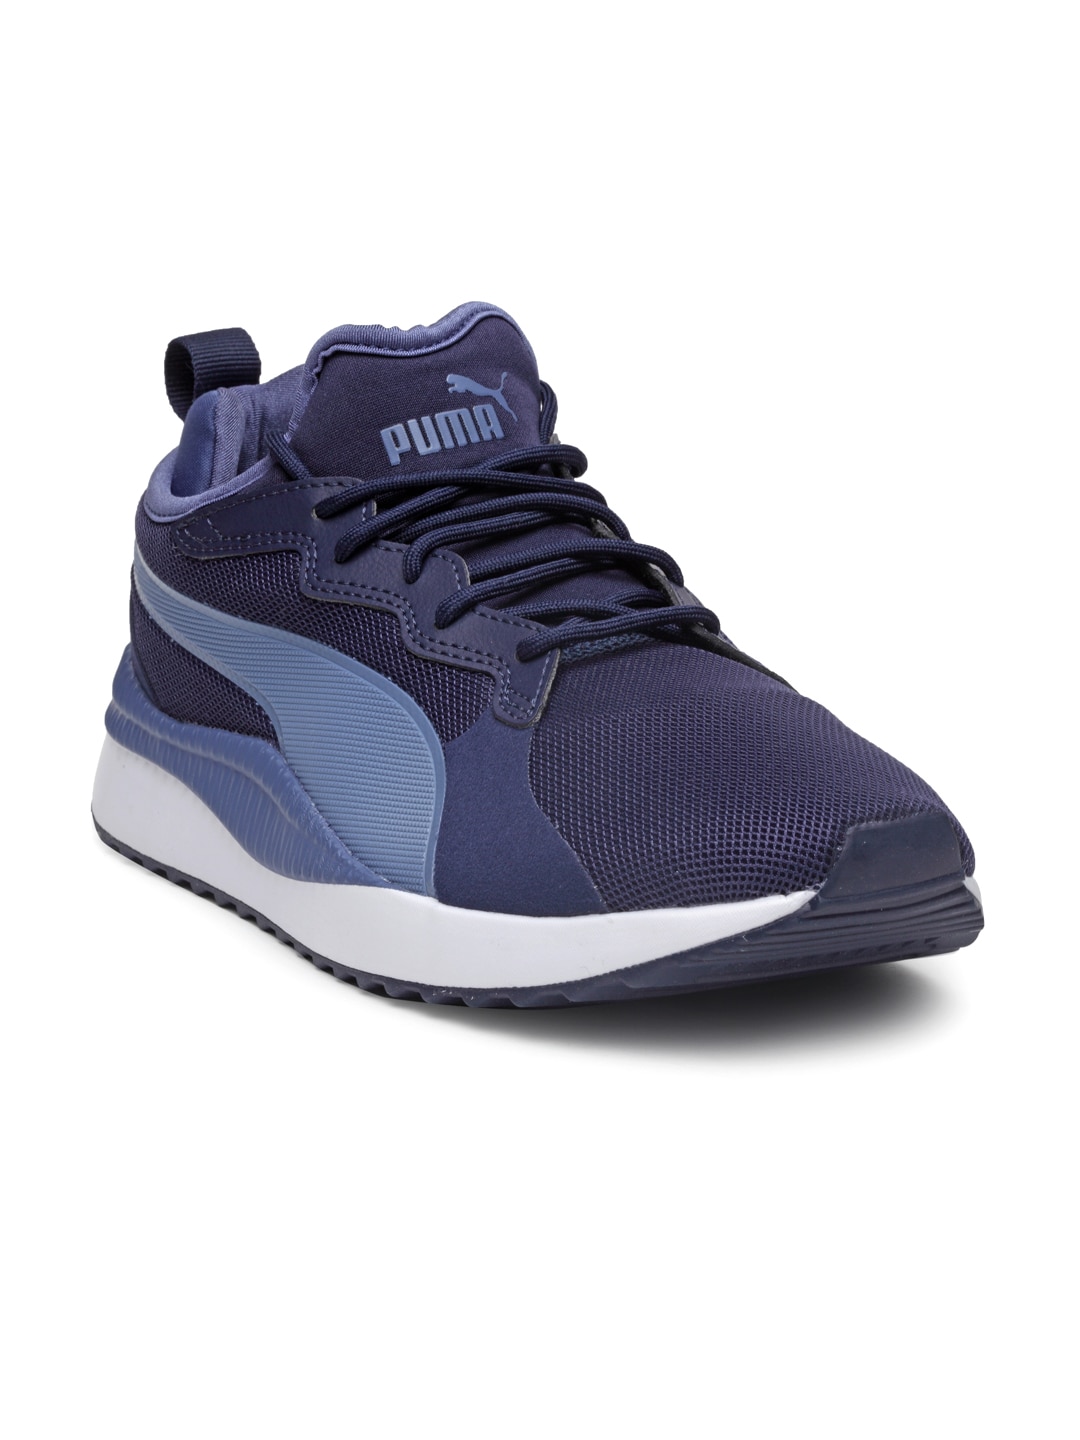 Puma Salziiidp Navy Blue Sneakers for Men online in India at Best price ...